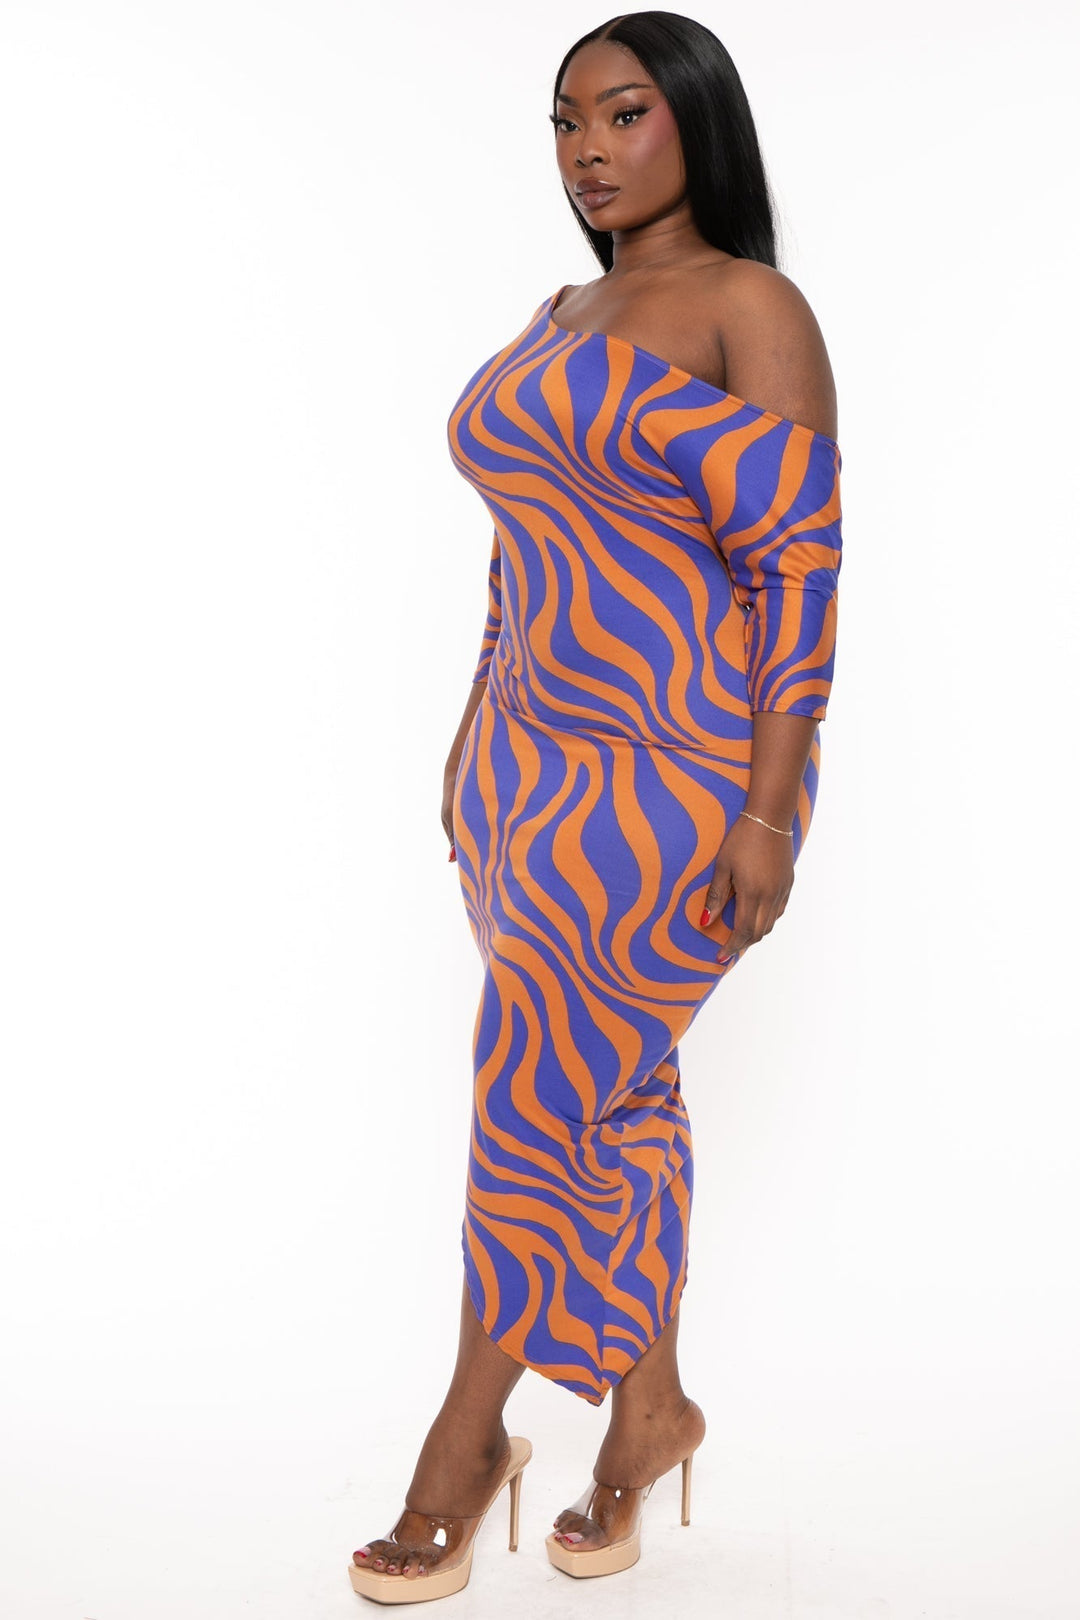 Curvy Sense Dresses Plus Size Asymmetric Printed Dress - Blue